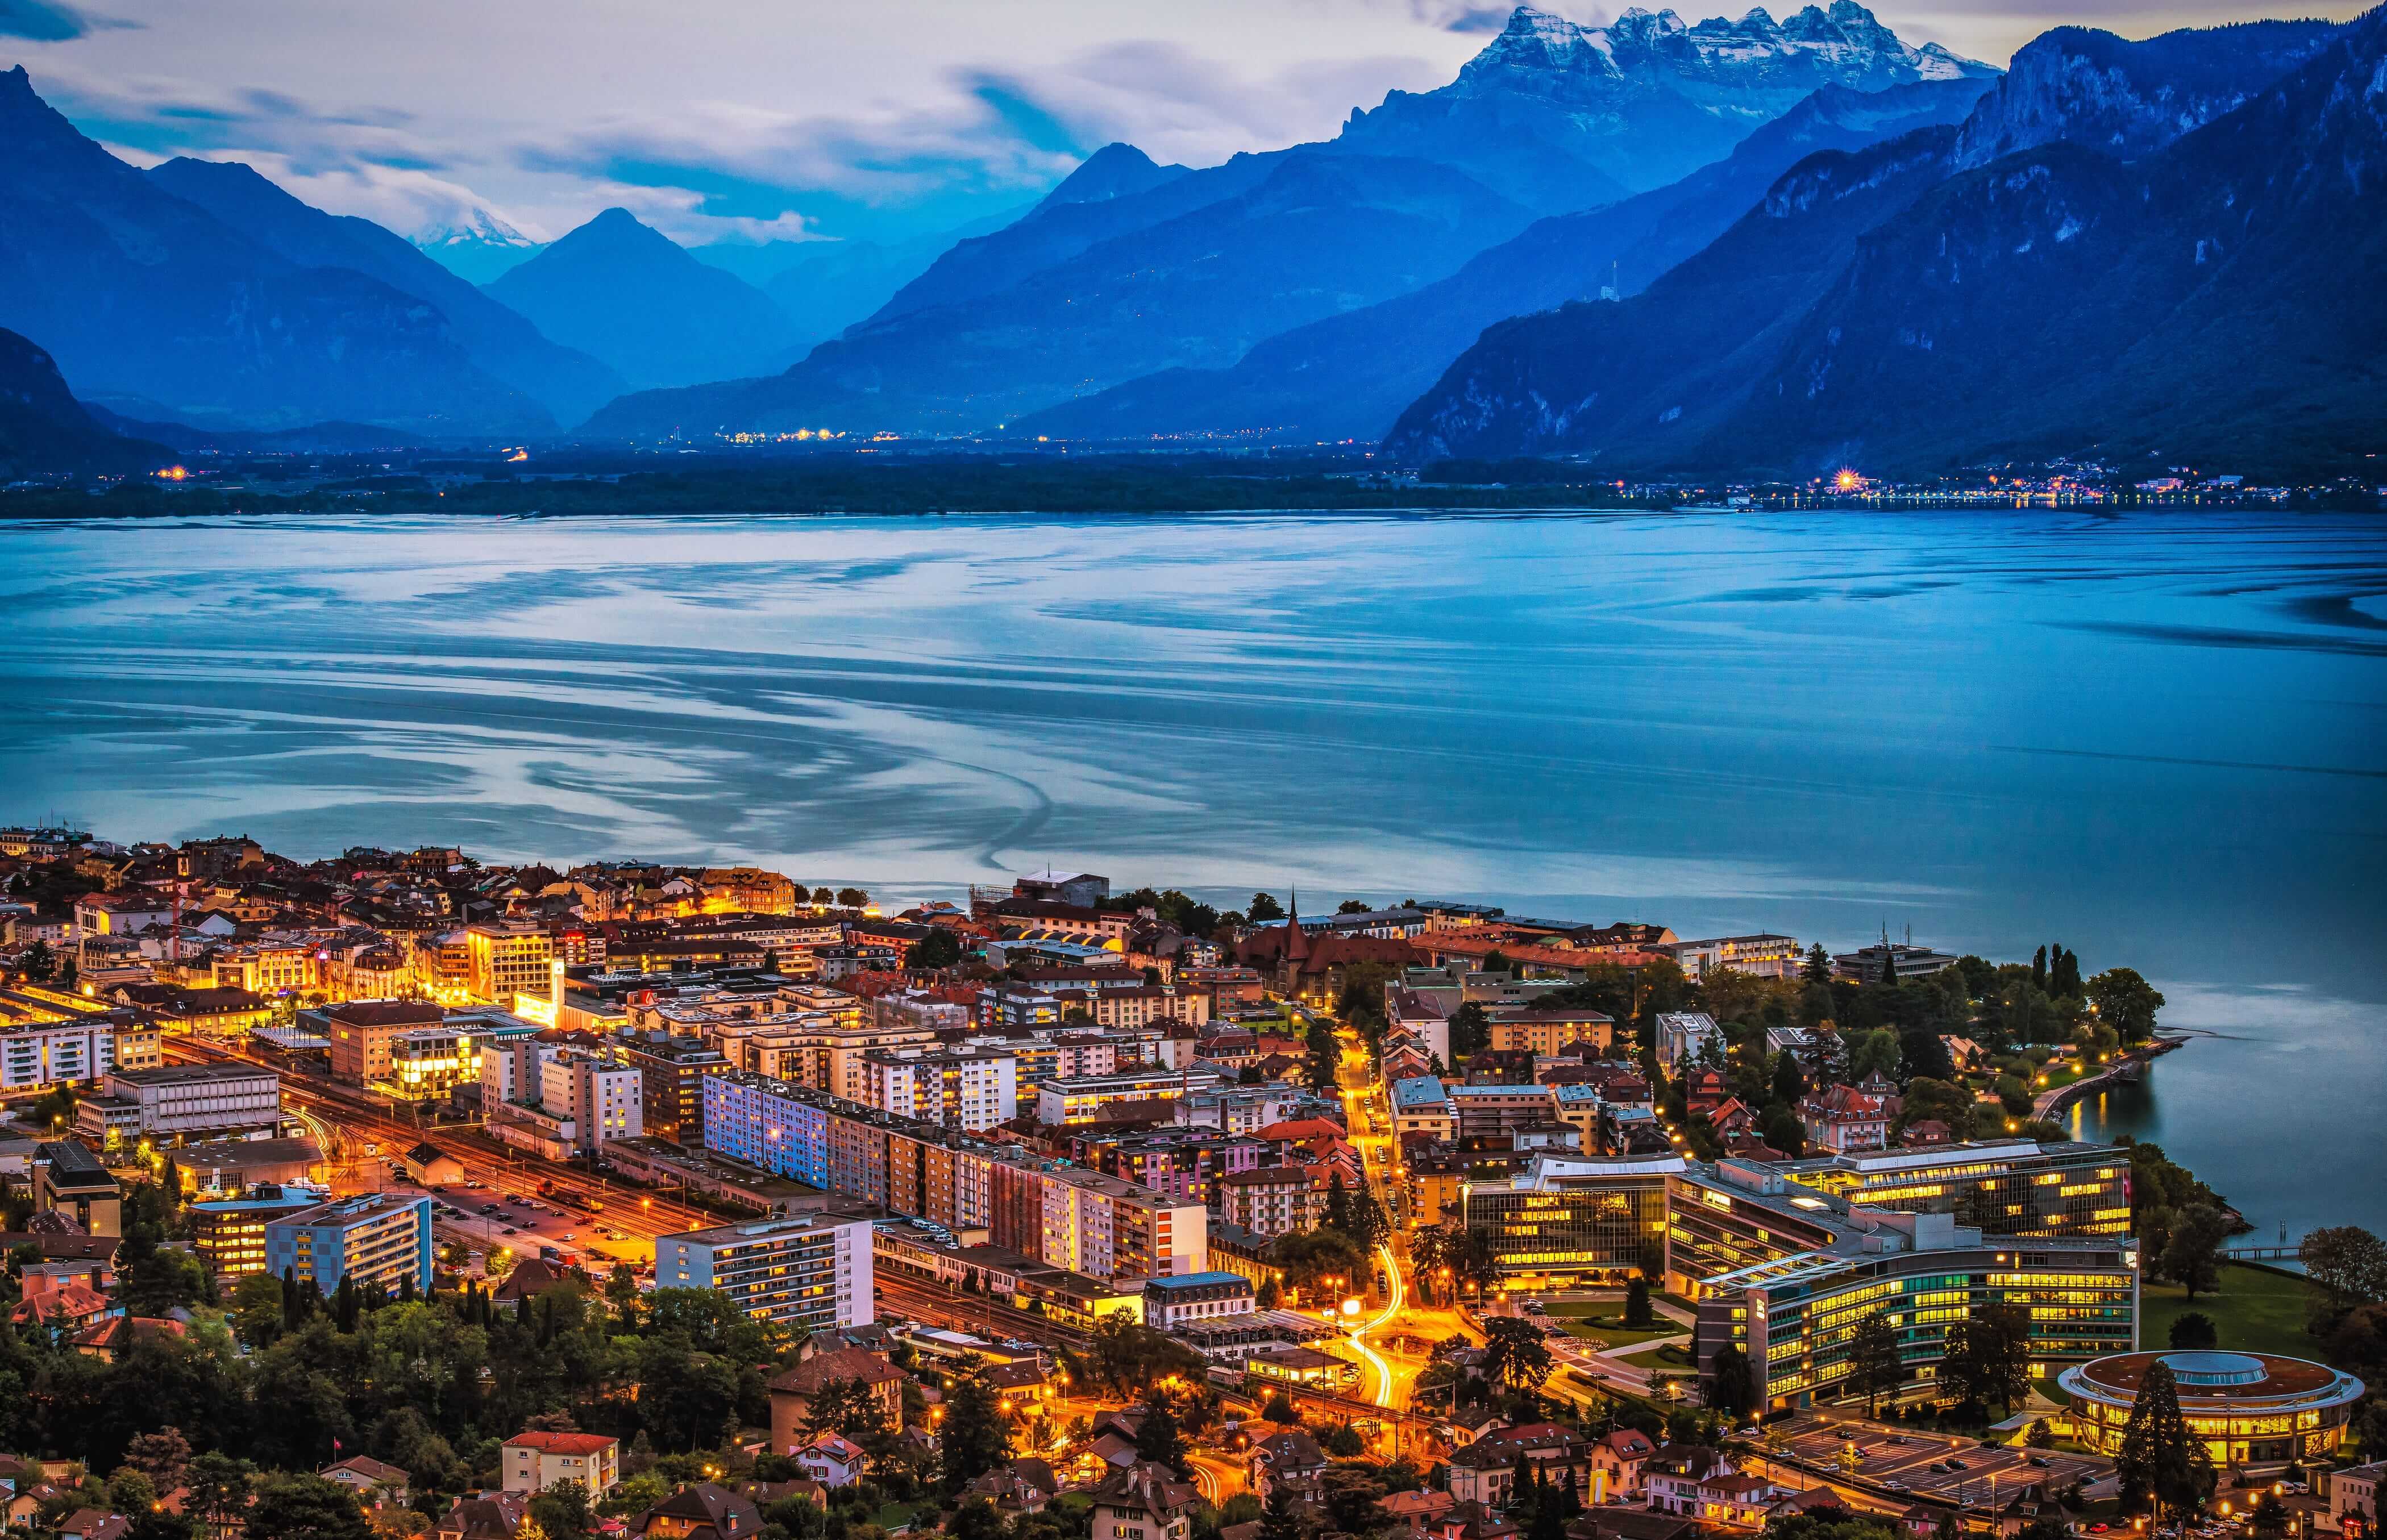 Honeymoon places in Switzerland: Geneva